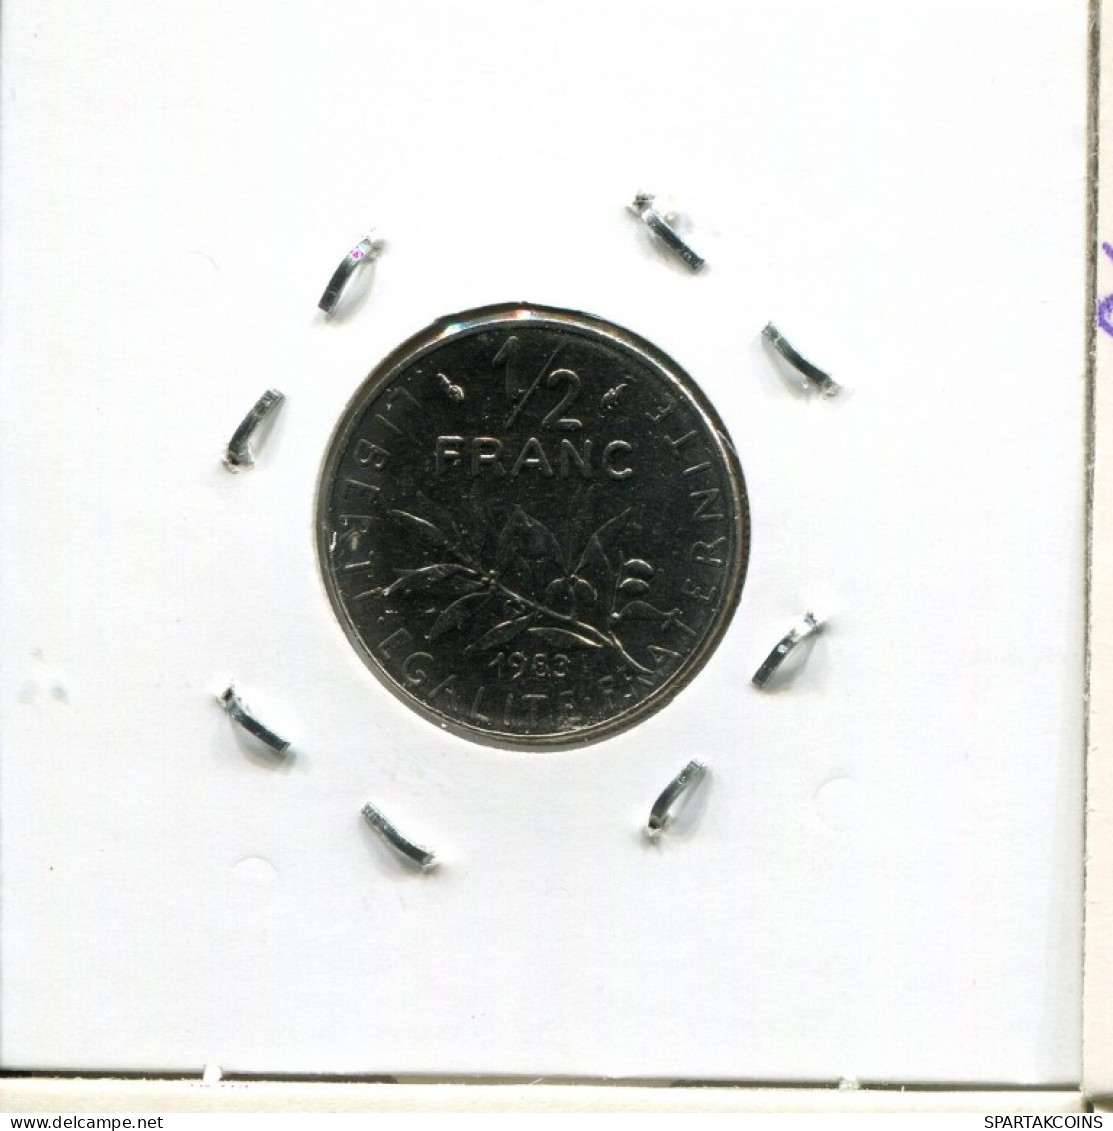 1/2 FRANC 1983 FRANCE Coin French Coin #AN921.U.A - 1/2 Franc